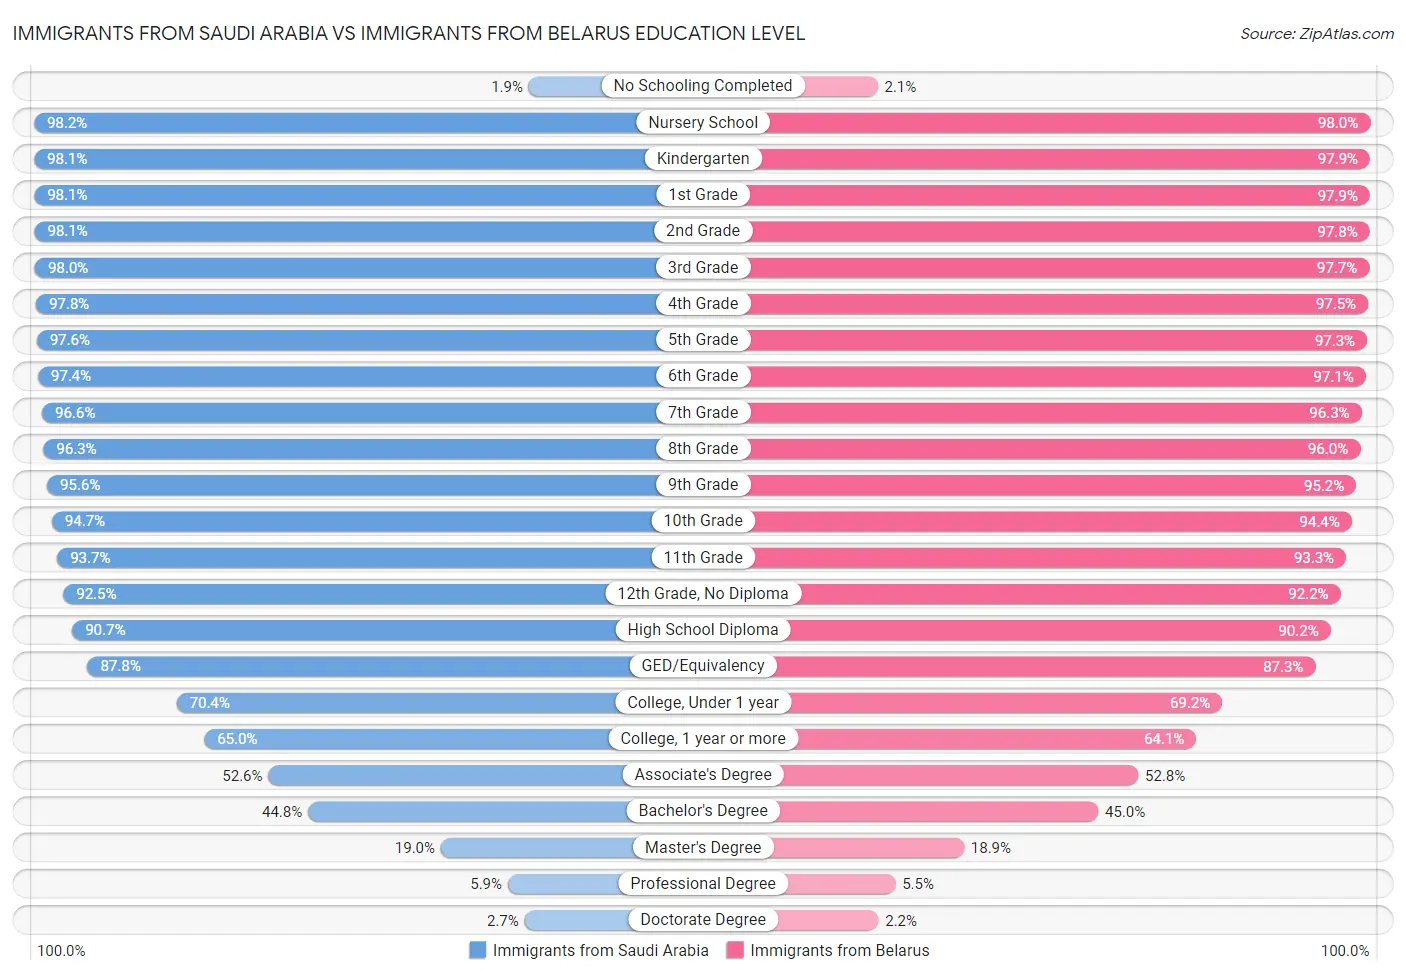 Immigrants from Saudi Arabia vs Immigrants from Belarus Education Level